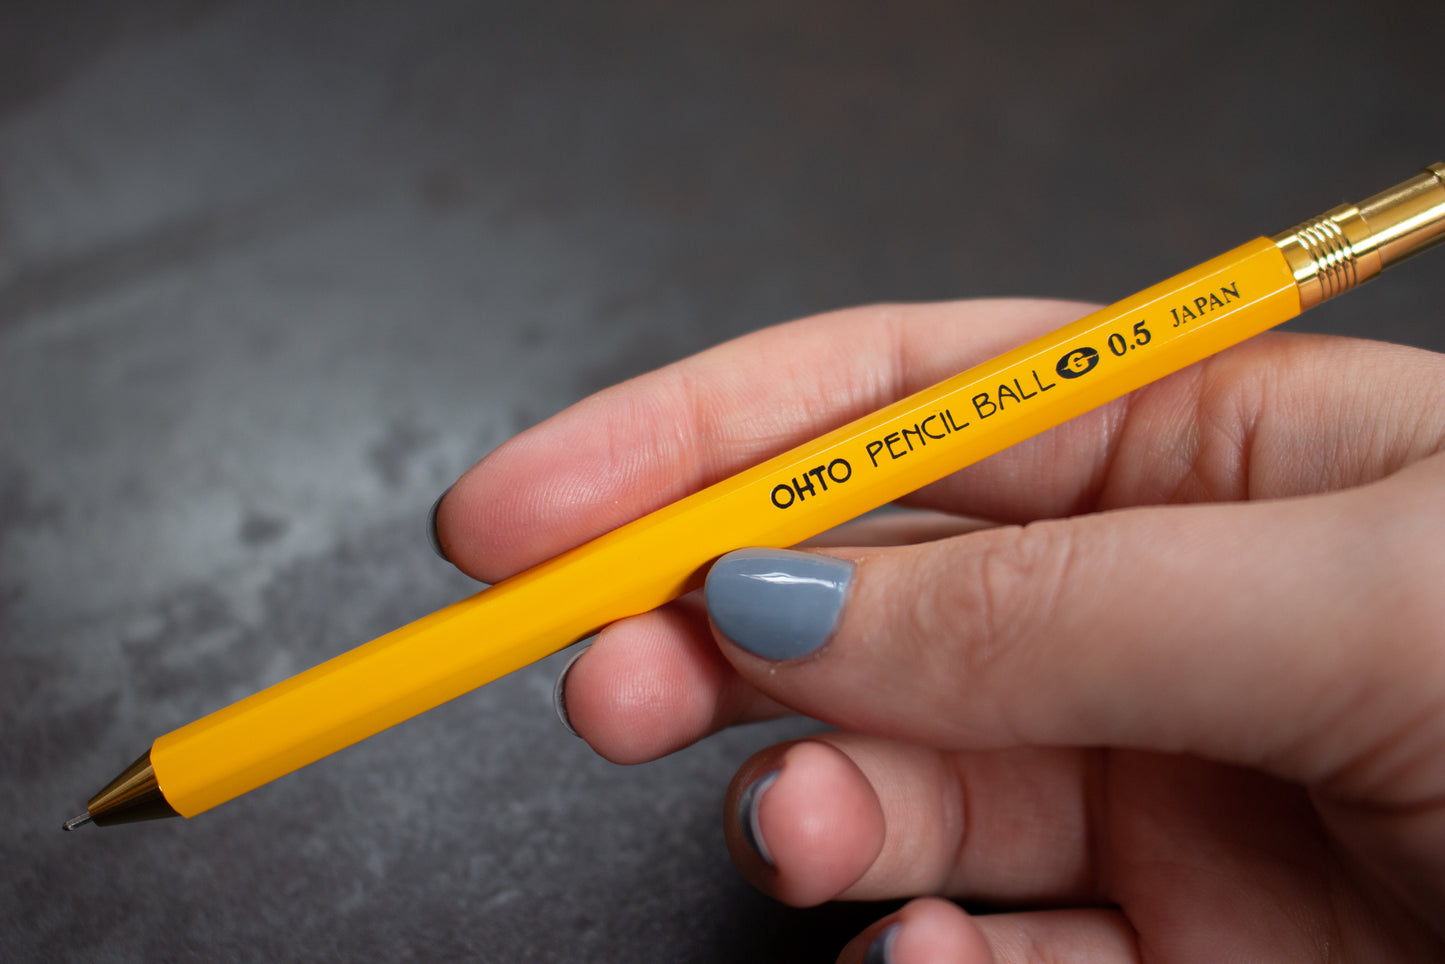 OHTO Pencil Ball 0.5mm Gel Pen - Yellow | Flywheel | Stationery | Tasmania